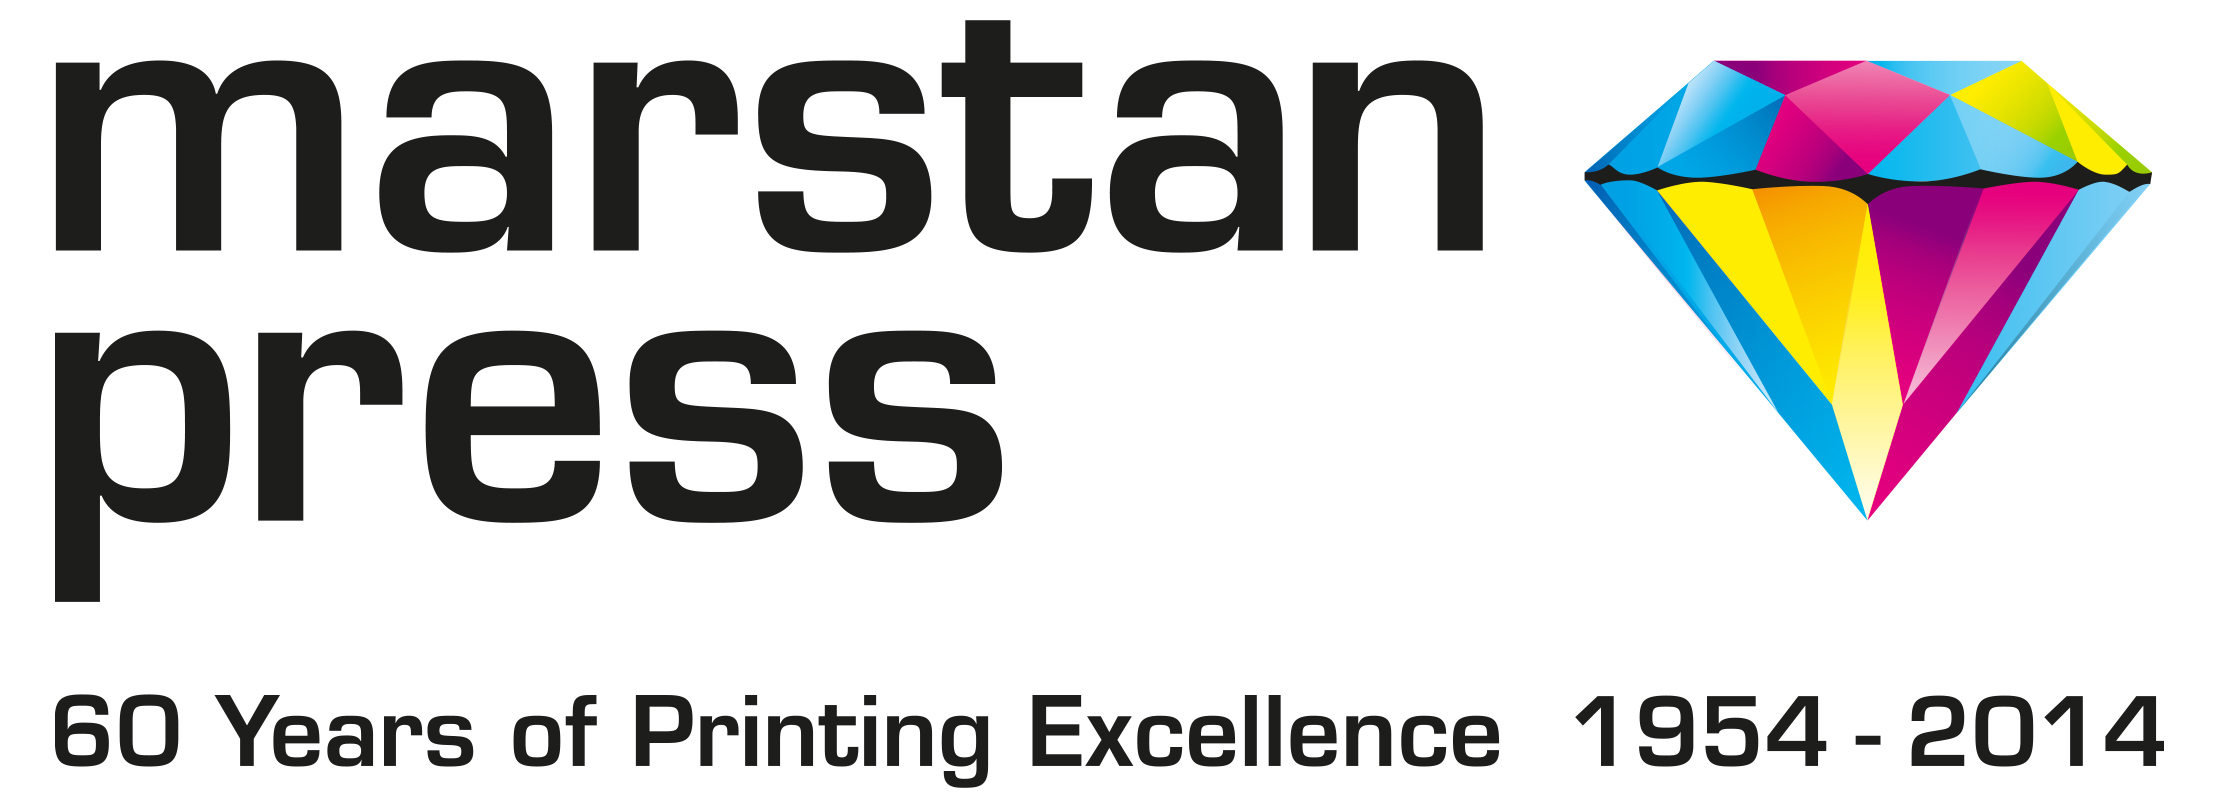 Marstan Press Logo